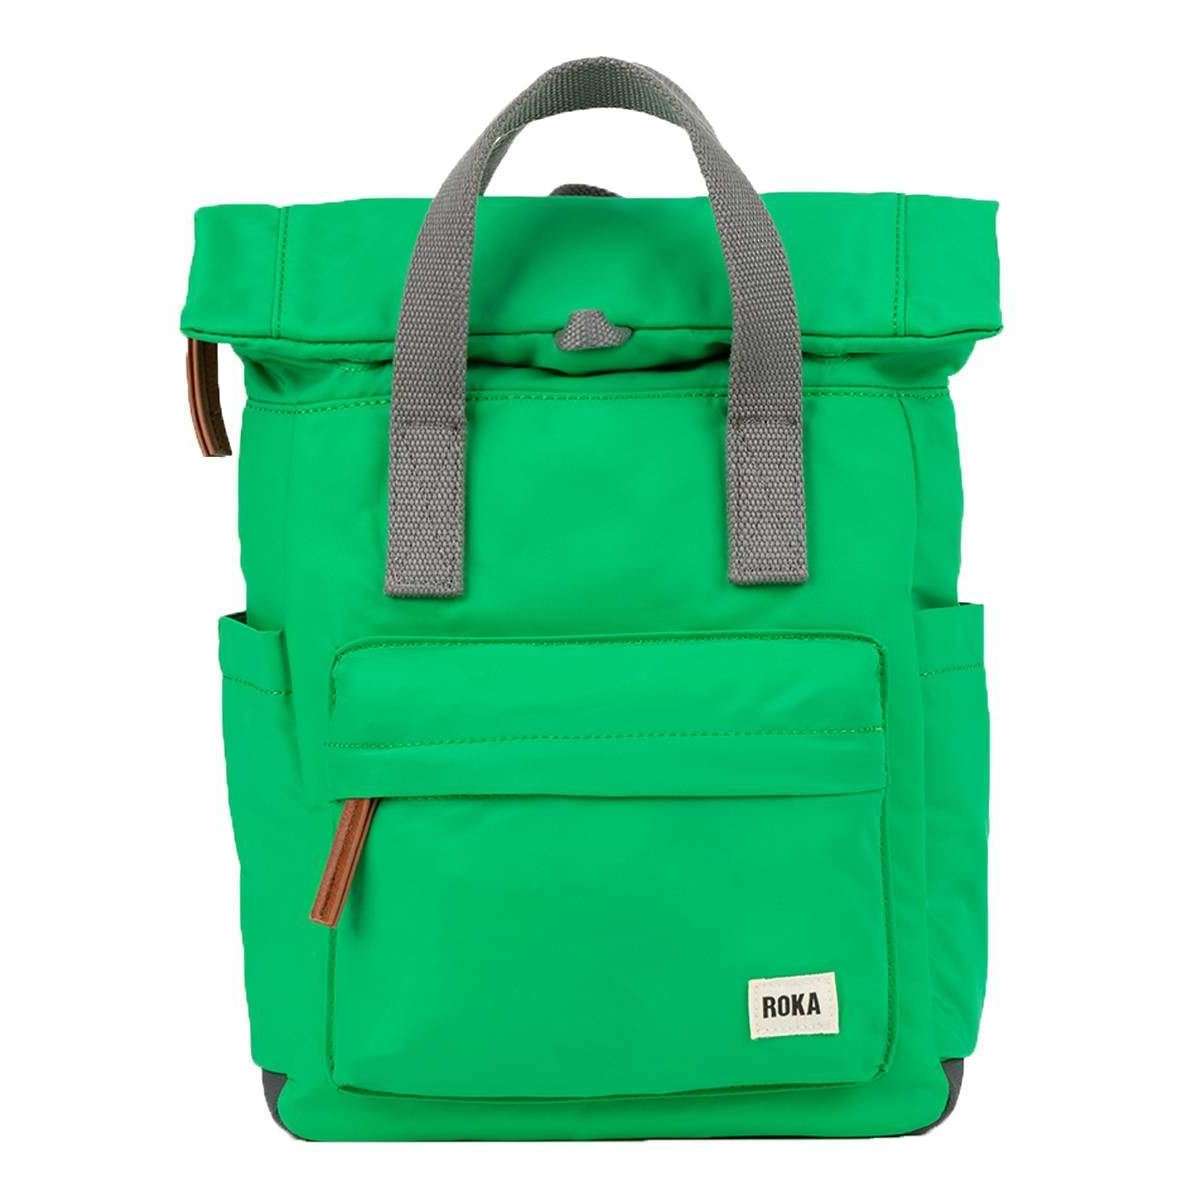 Roka Canfield B Small Sustainable Nylon Backpack - Green Apple